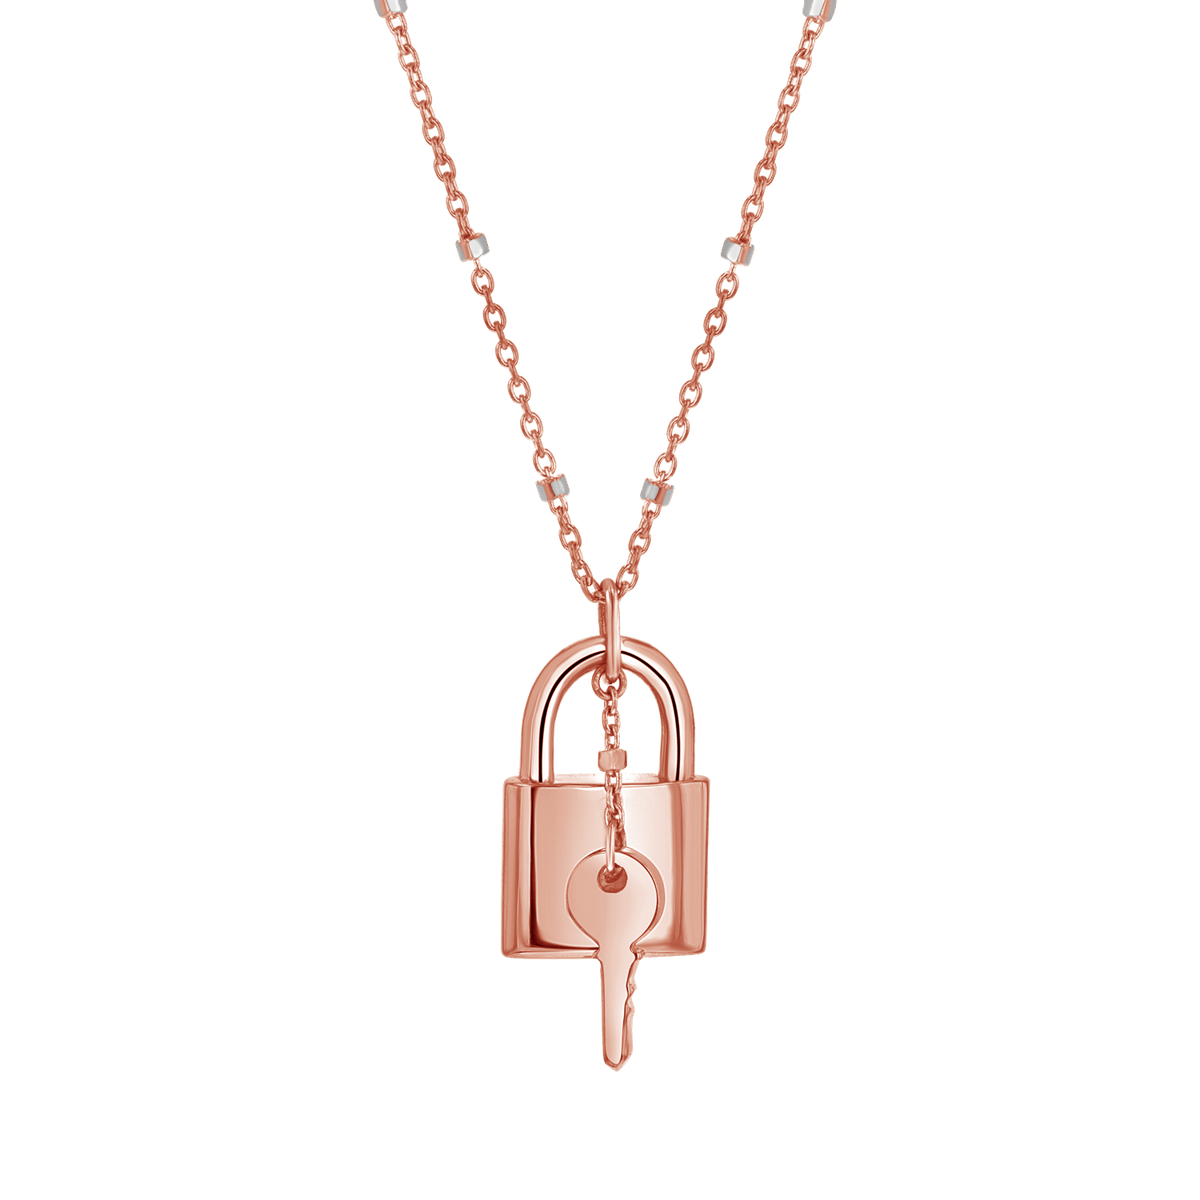 Shop 14K Rose Gold Diamond Padlock Necklace